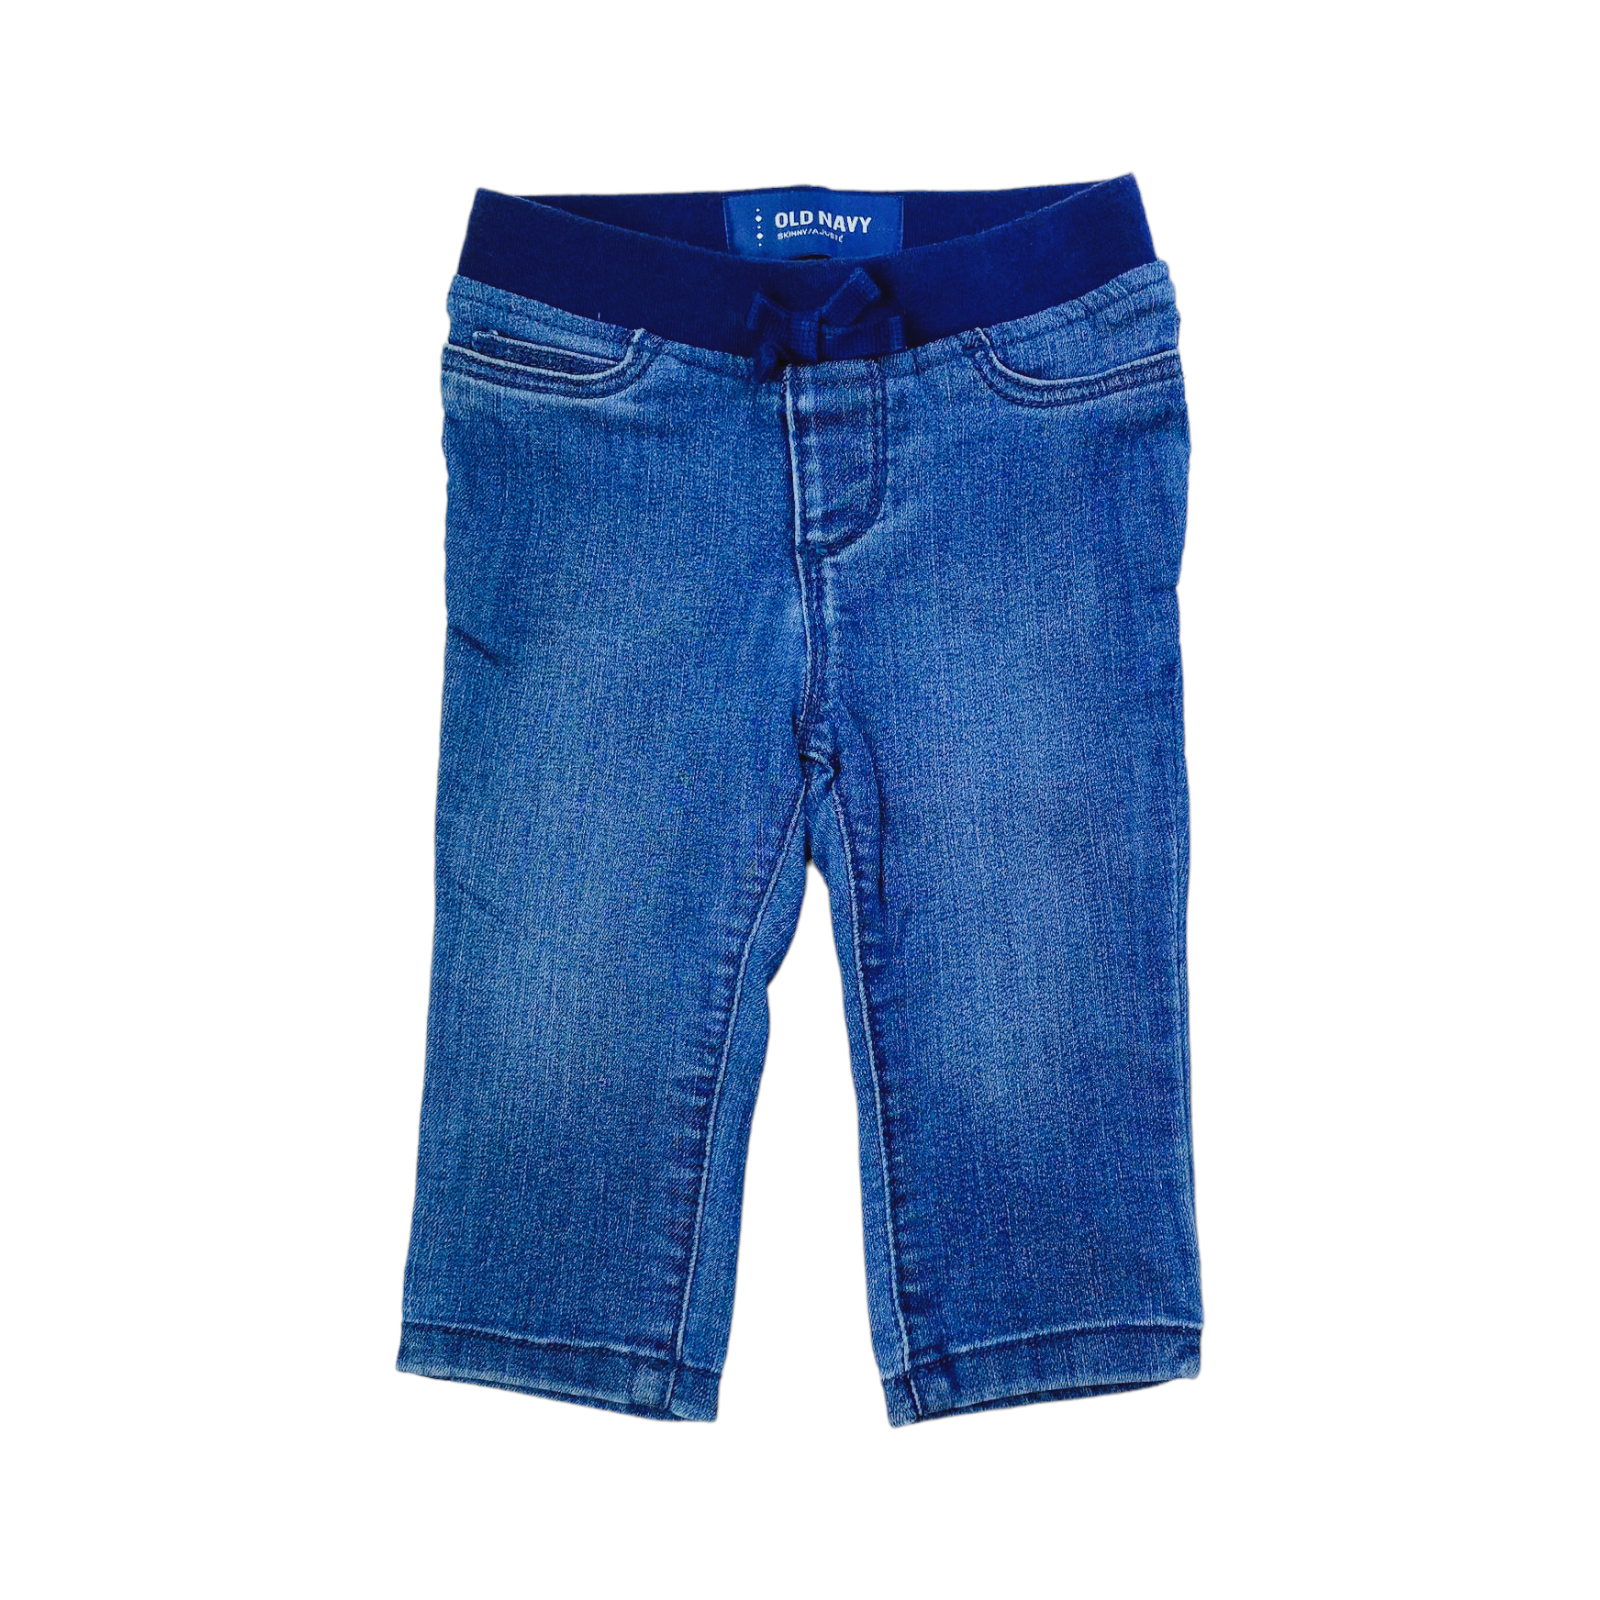 Pantalon Old Navy azul con pretina y lazo Talla 6-12 meses